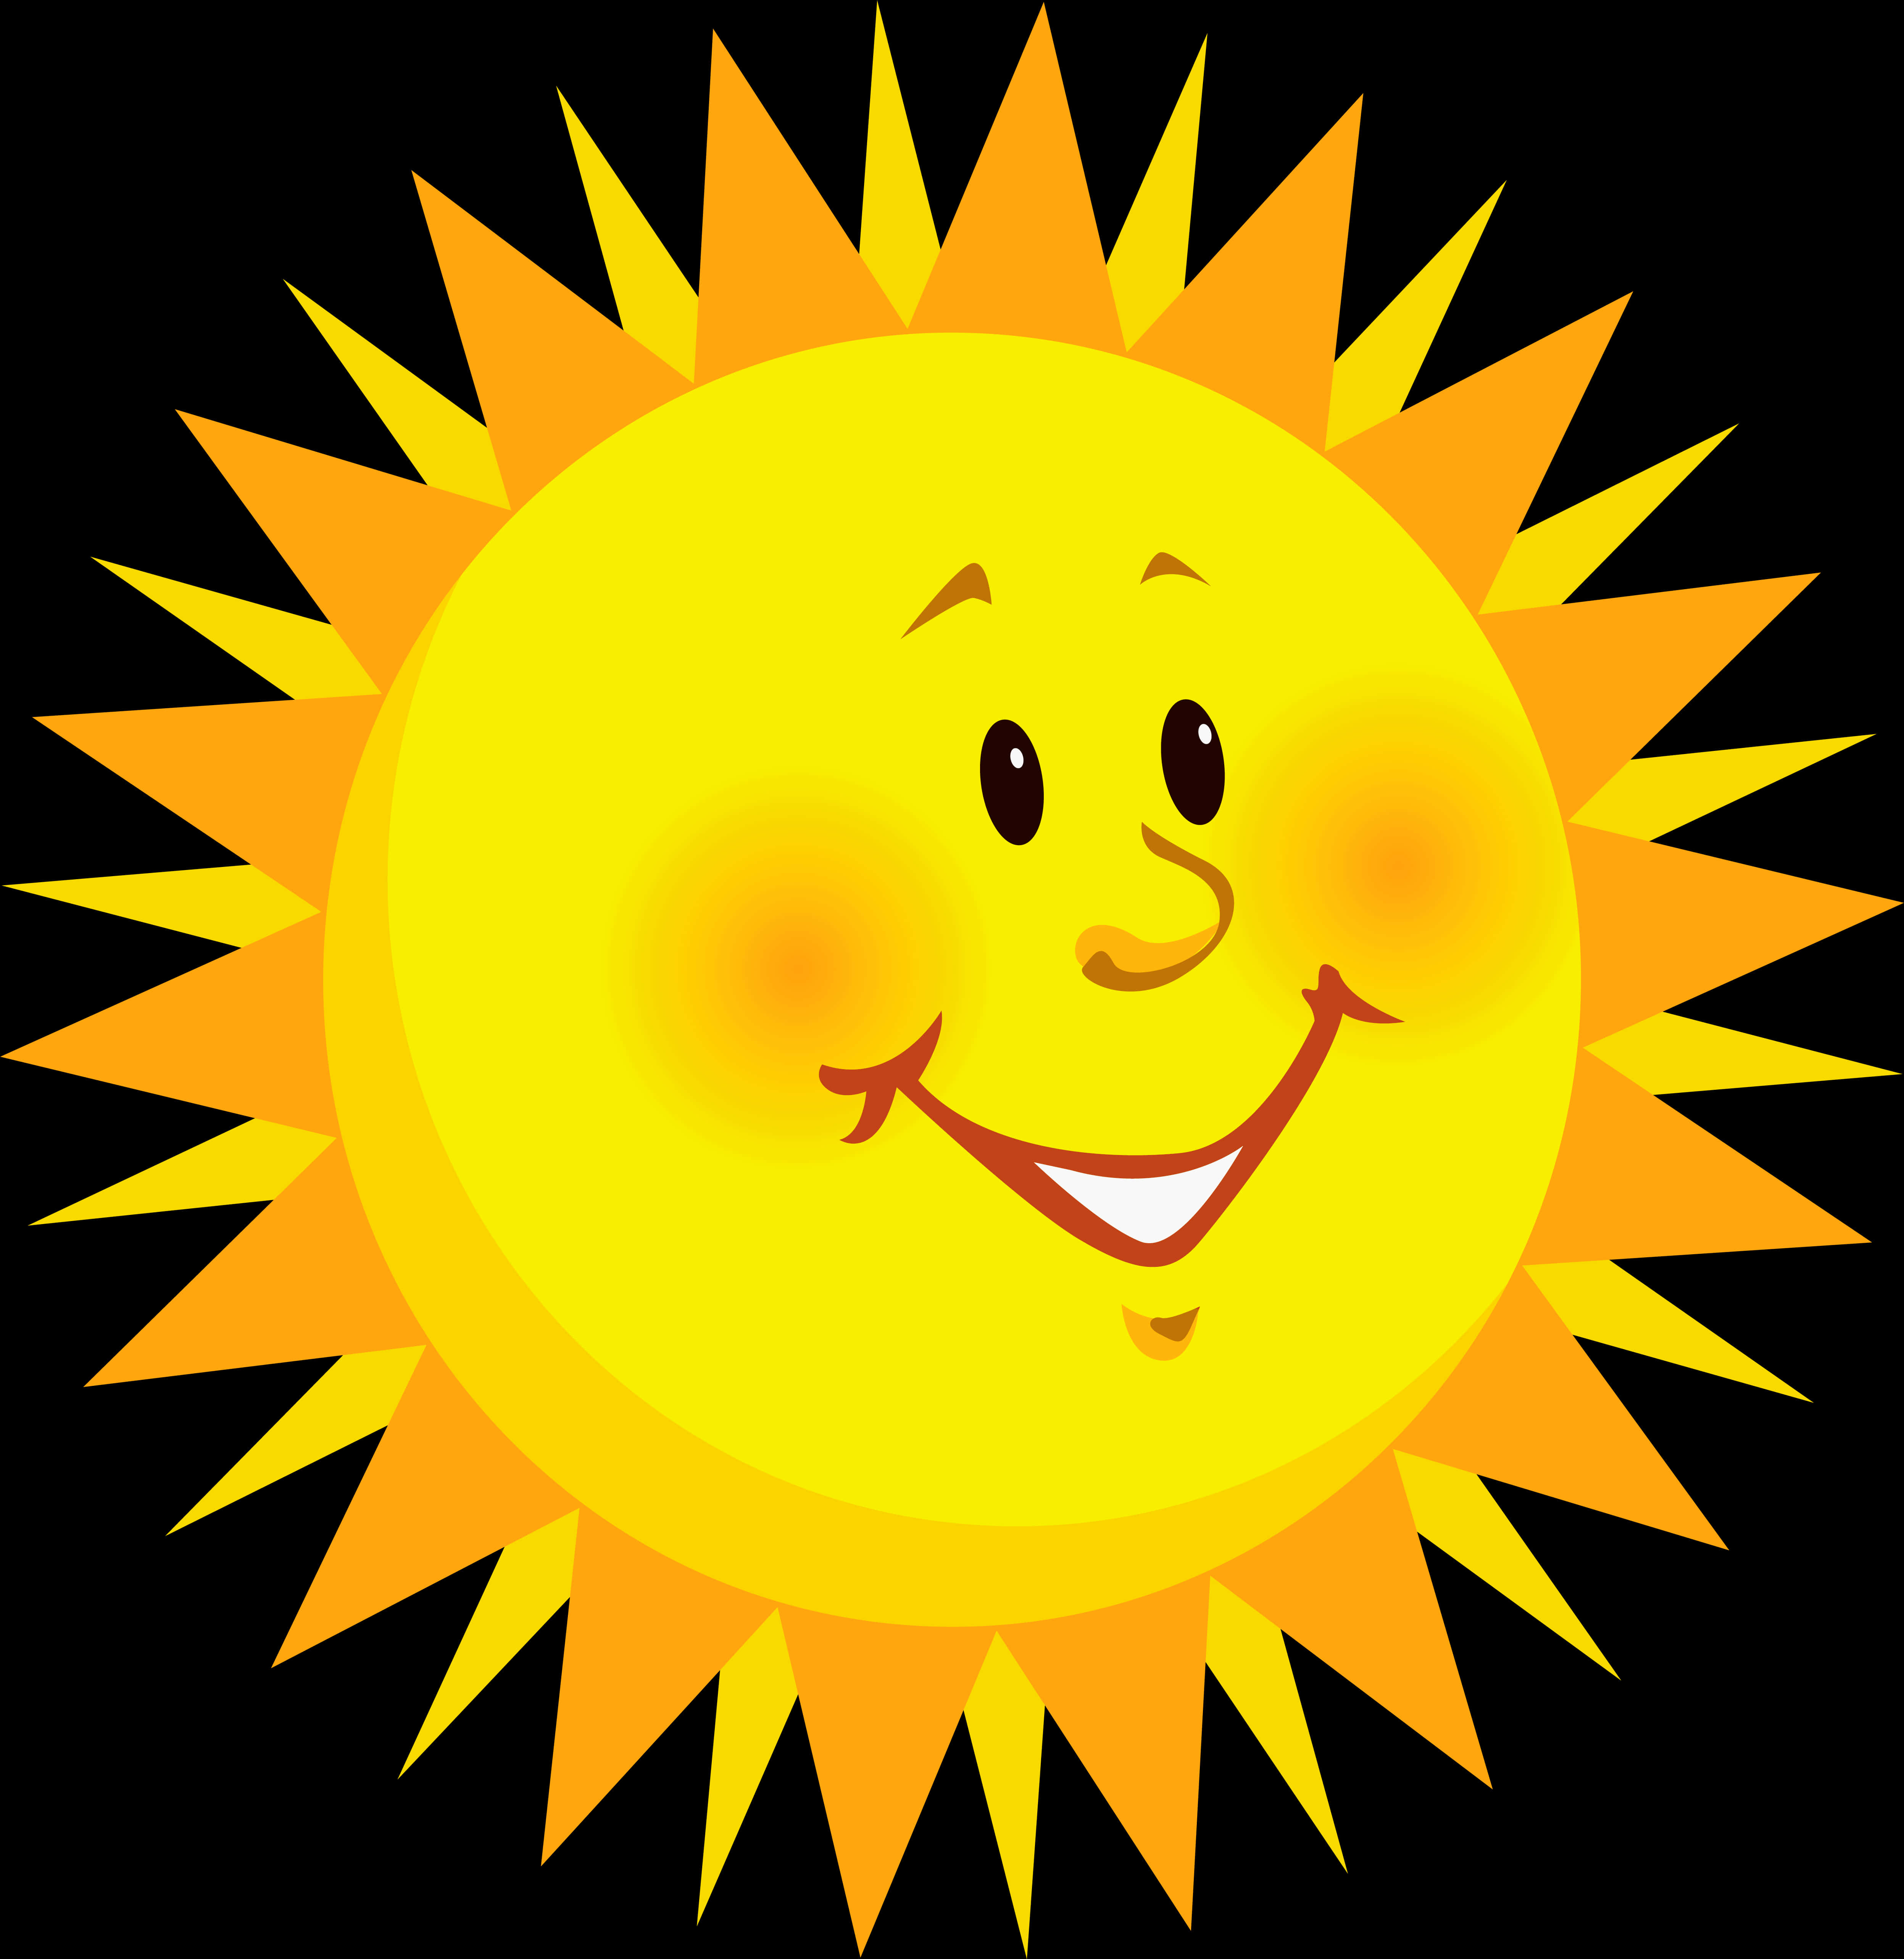 A Cartoon Sun With A Smiling Face